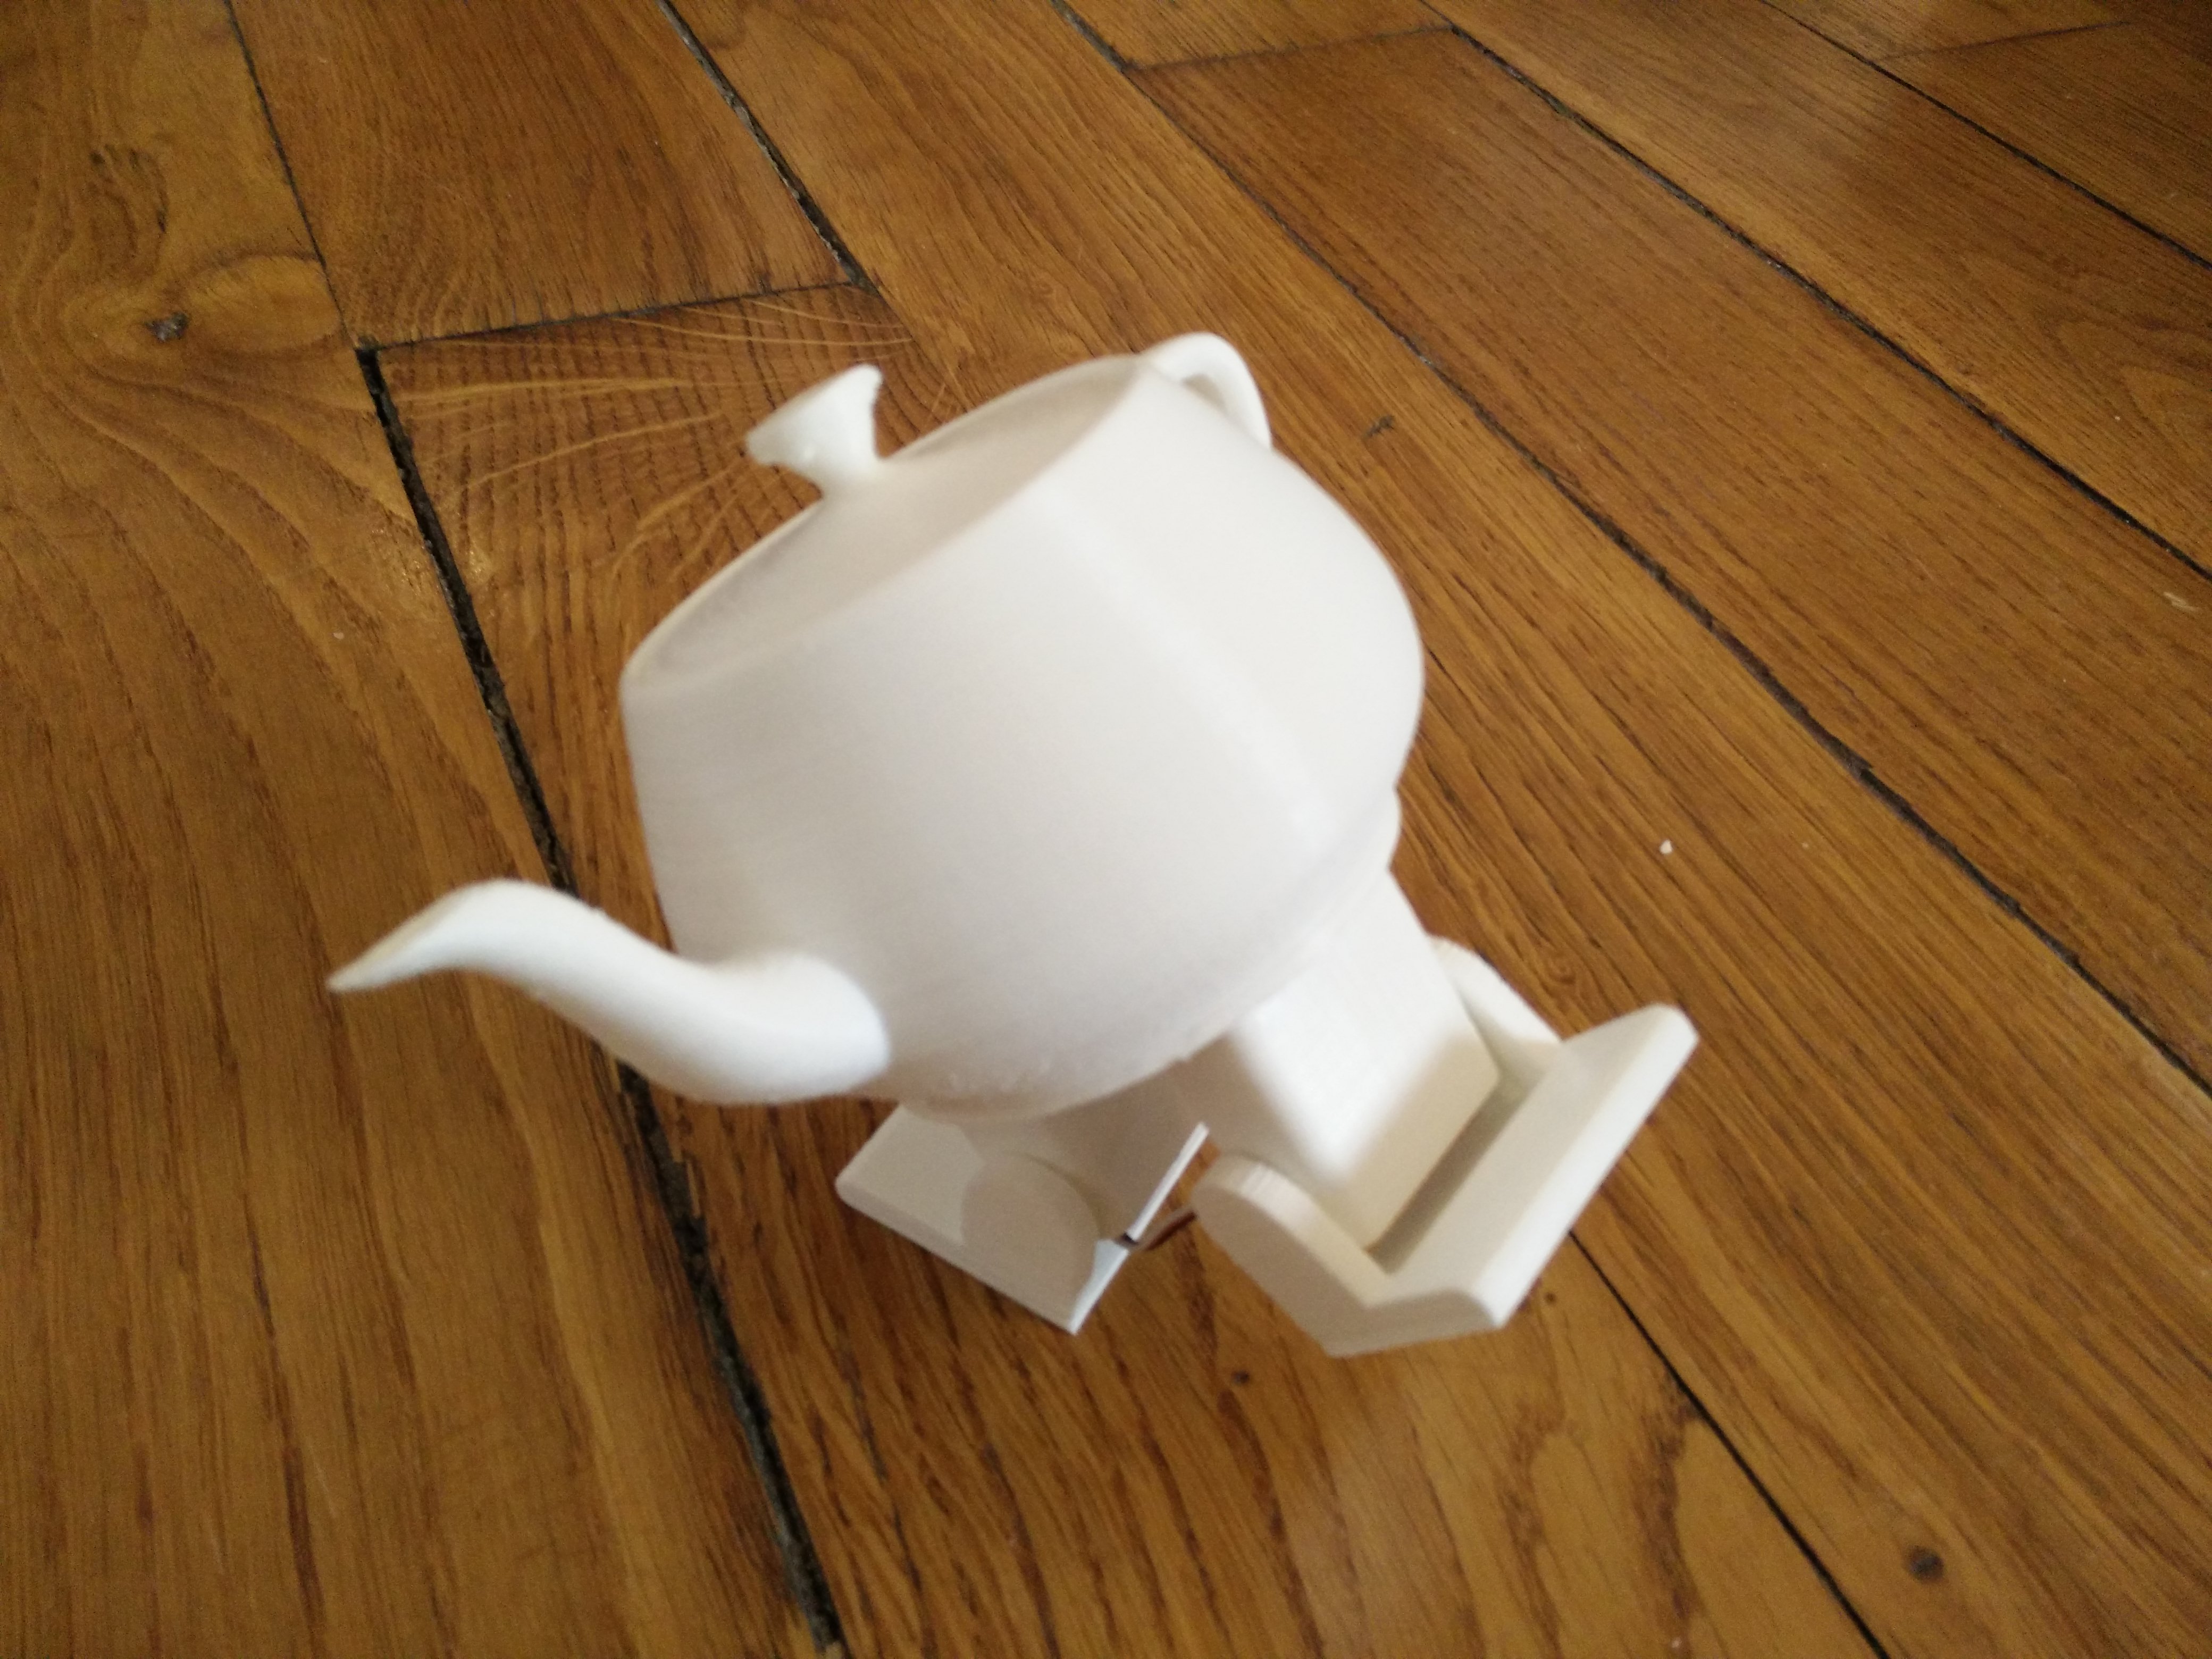 Plasteac, the robotic dancing teapot